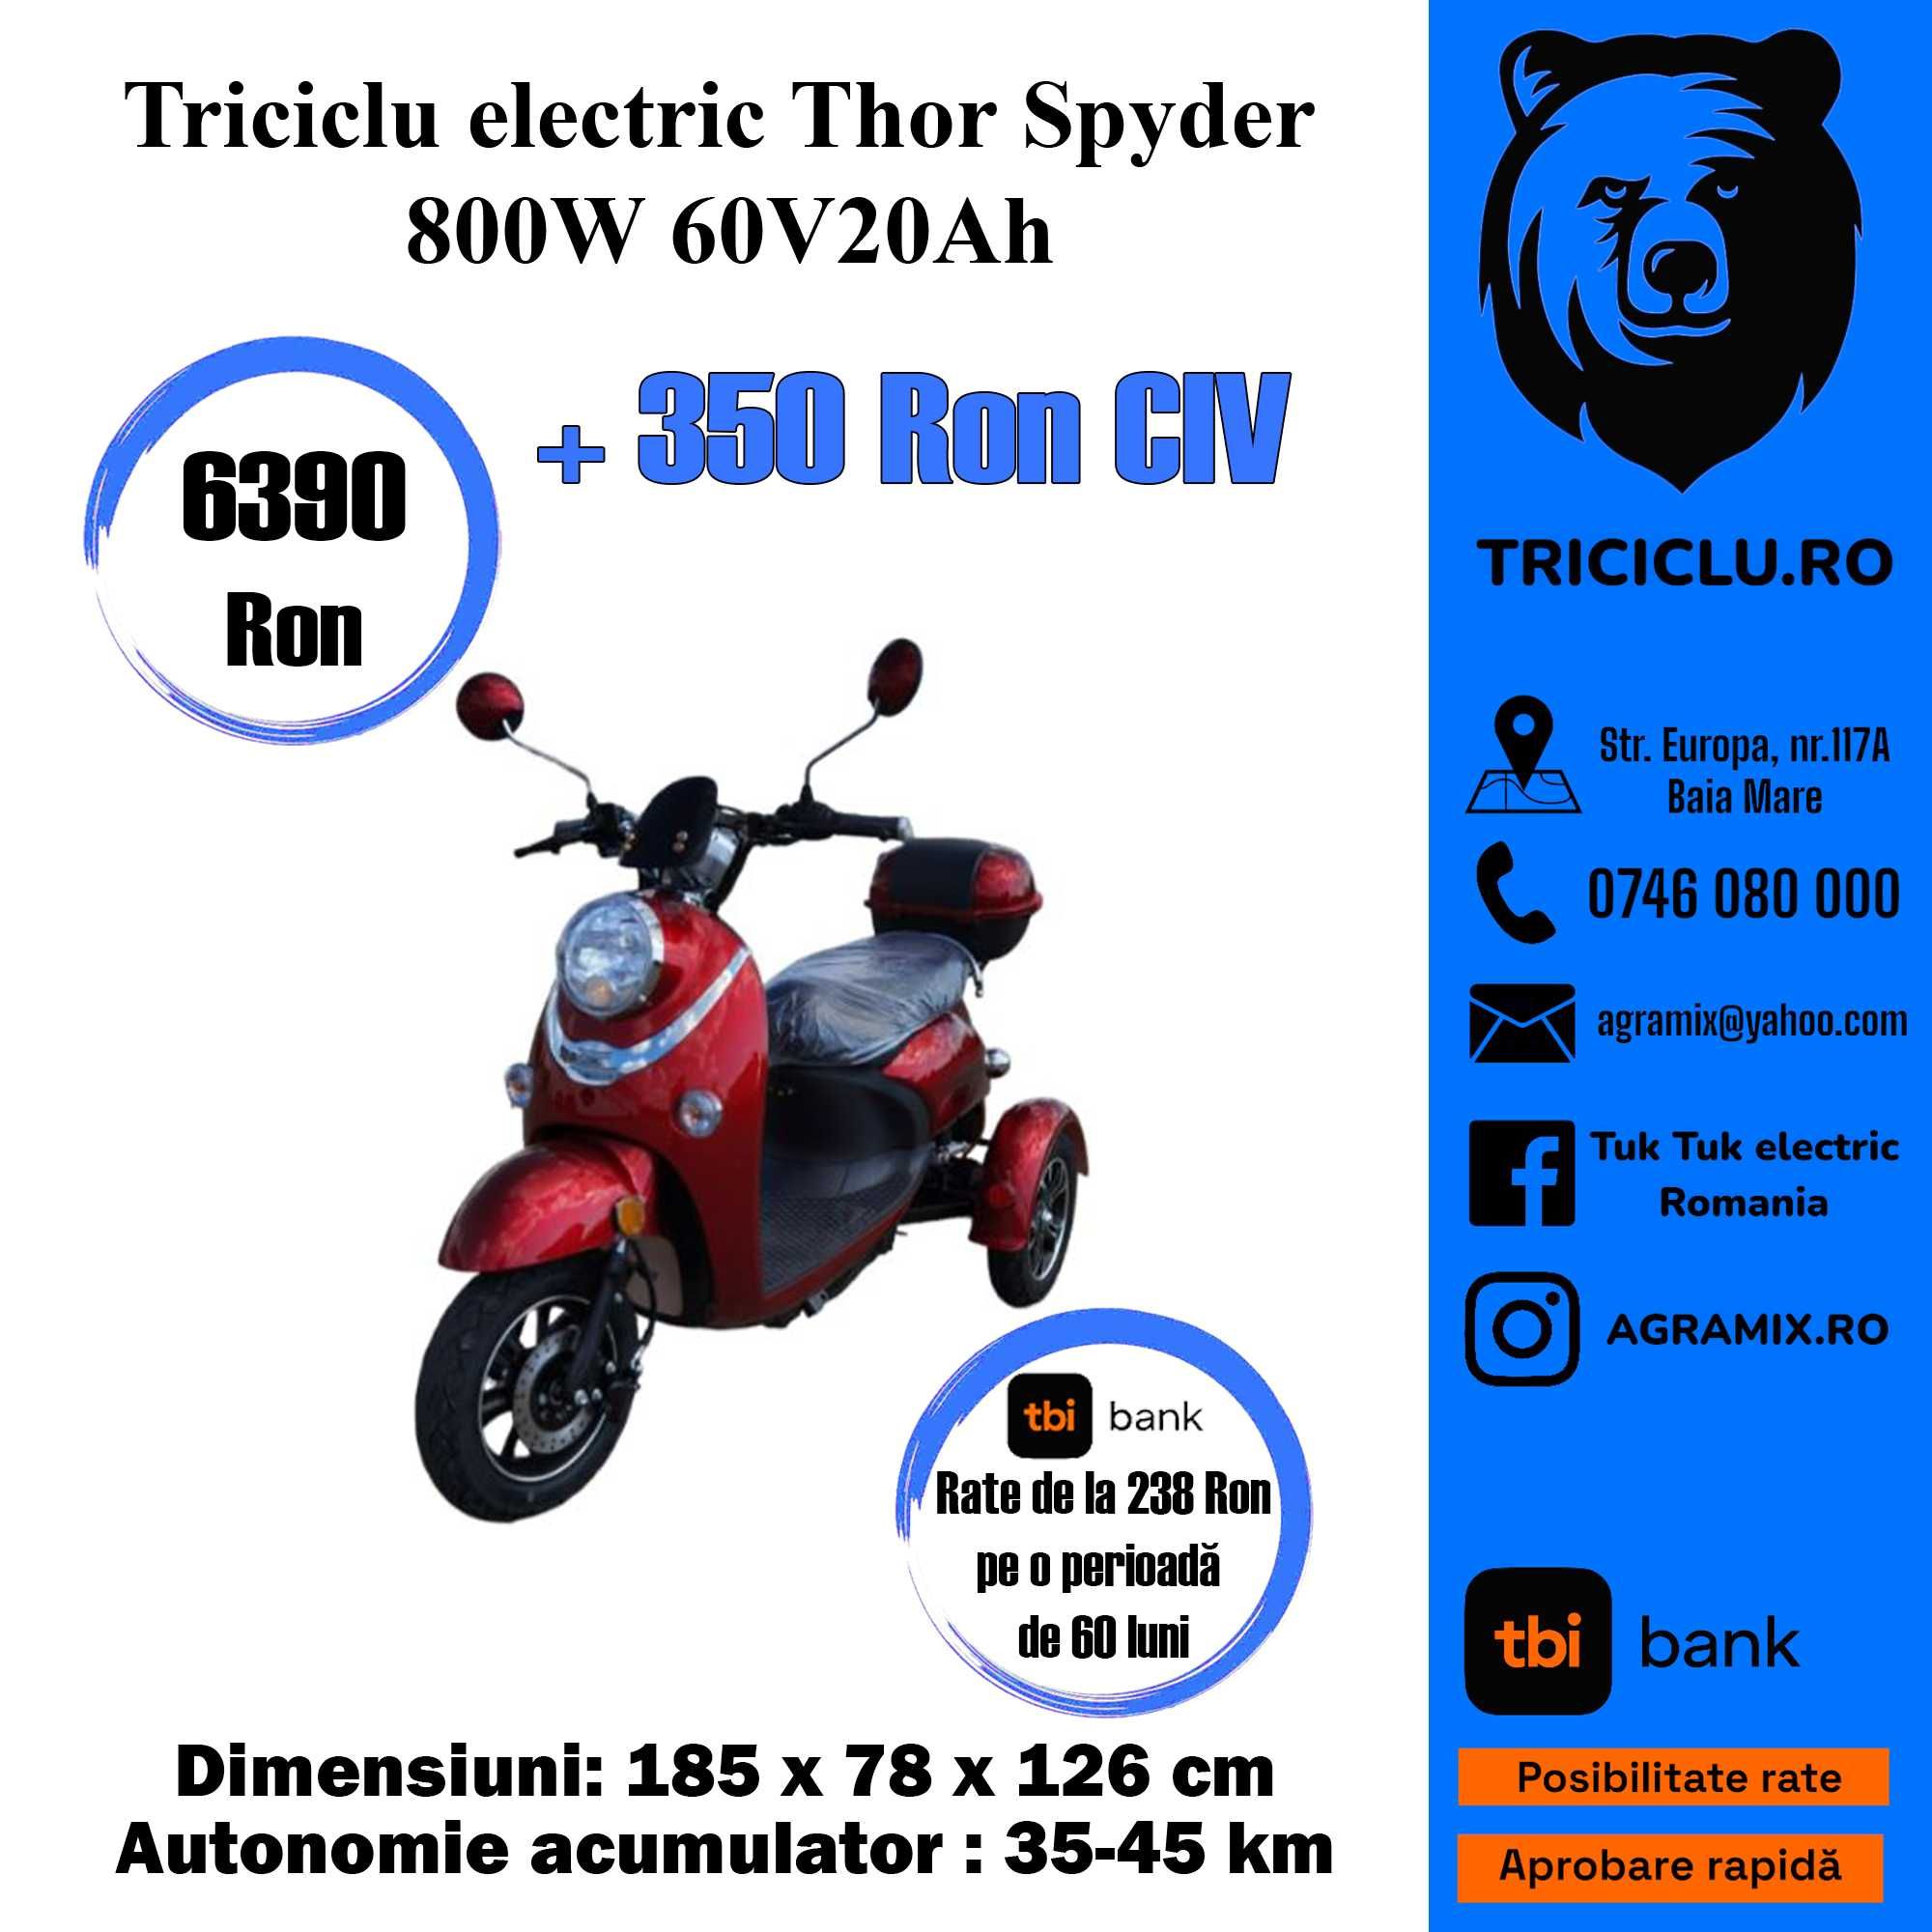 Triciclu electric Thor Spyder 800W 60V20Ah nou Agramix